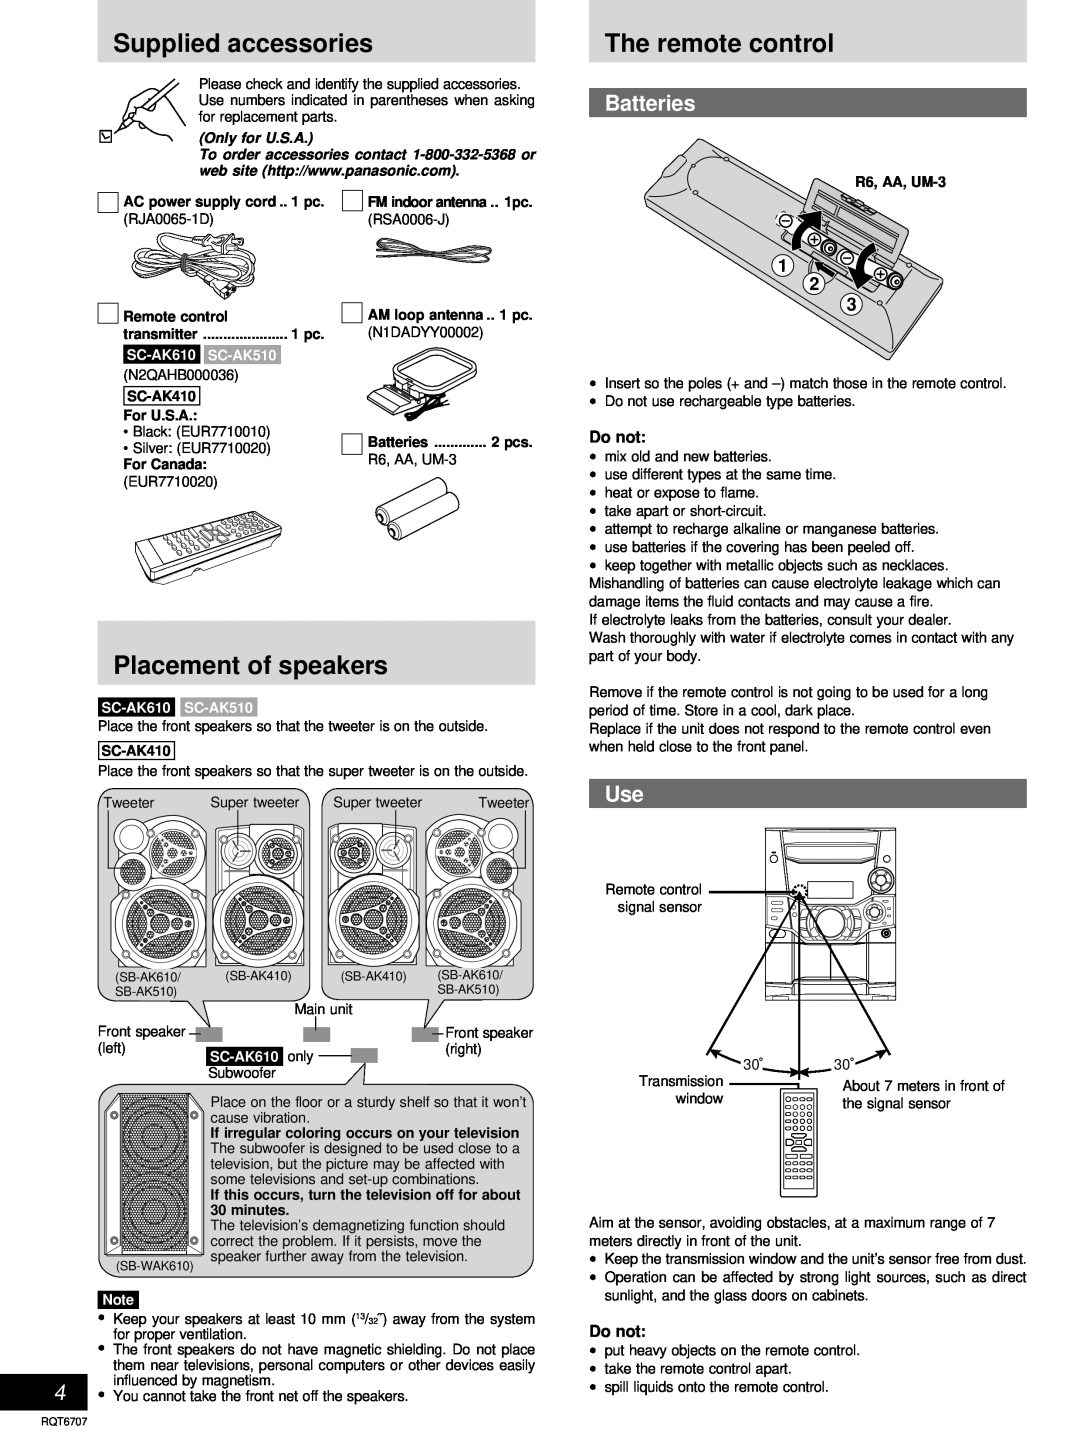 Panasonic SC-AK410 manual Supplied accessories, The remote control, Placement of speakers, Batteries, SC-AK610, SC-AK510 